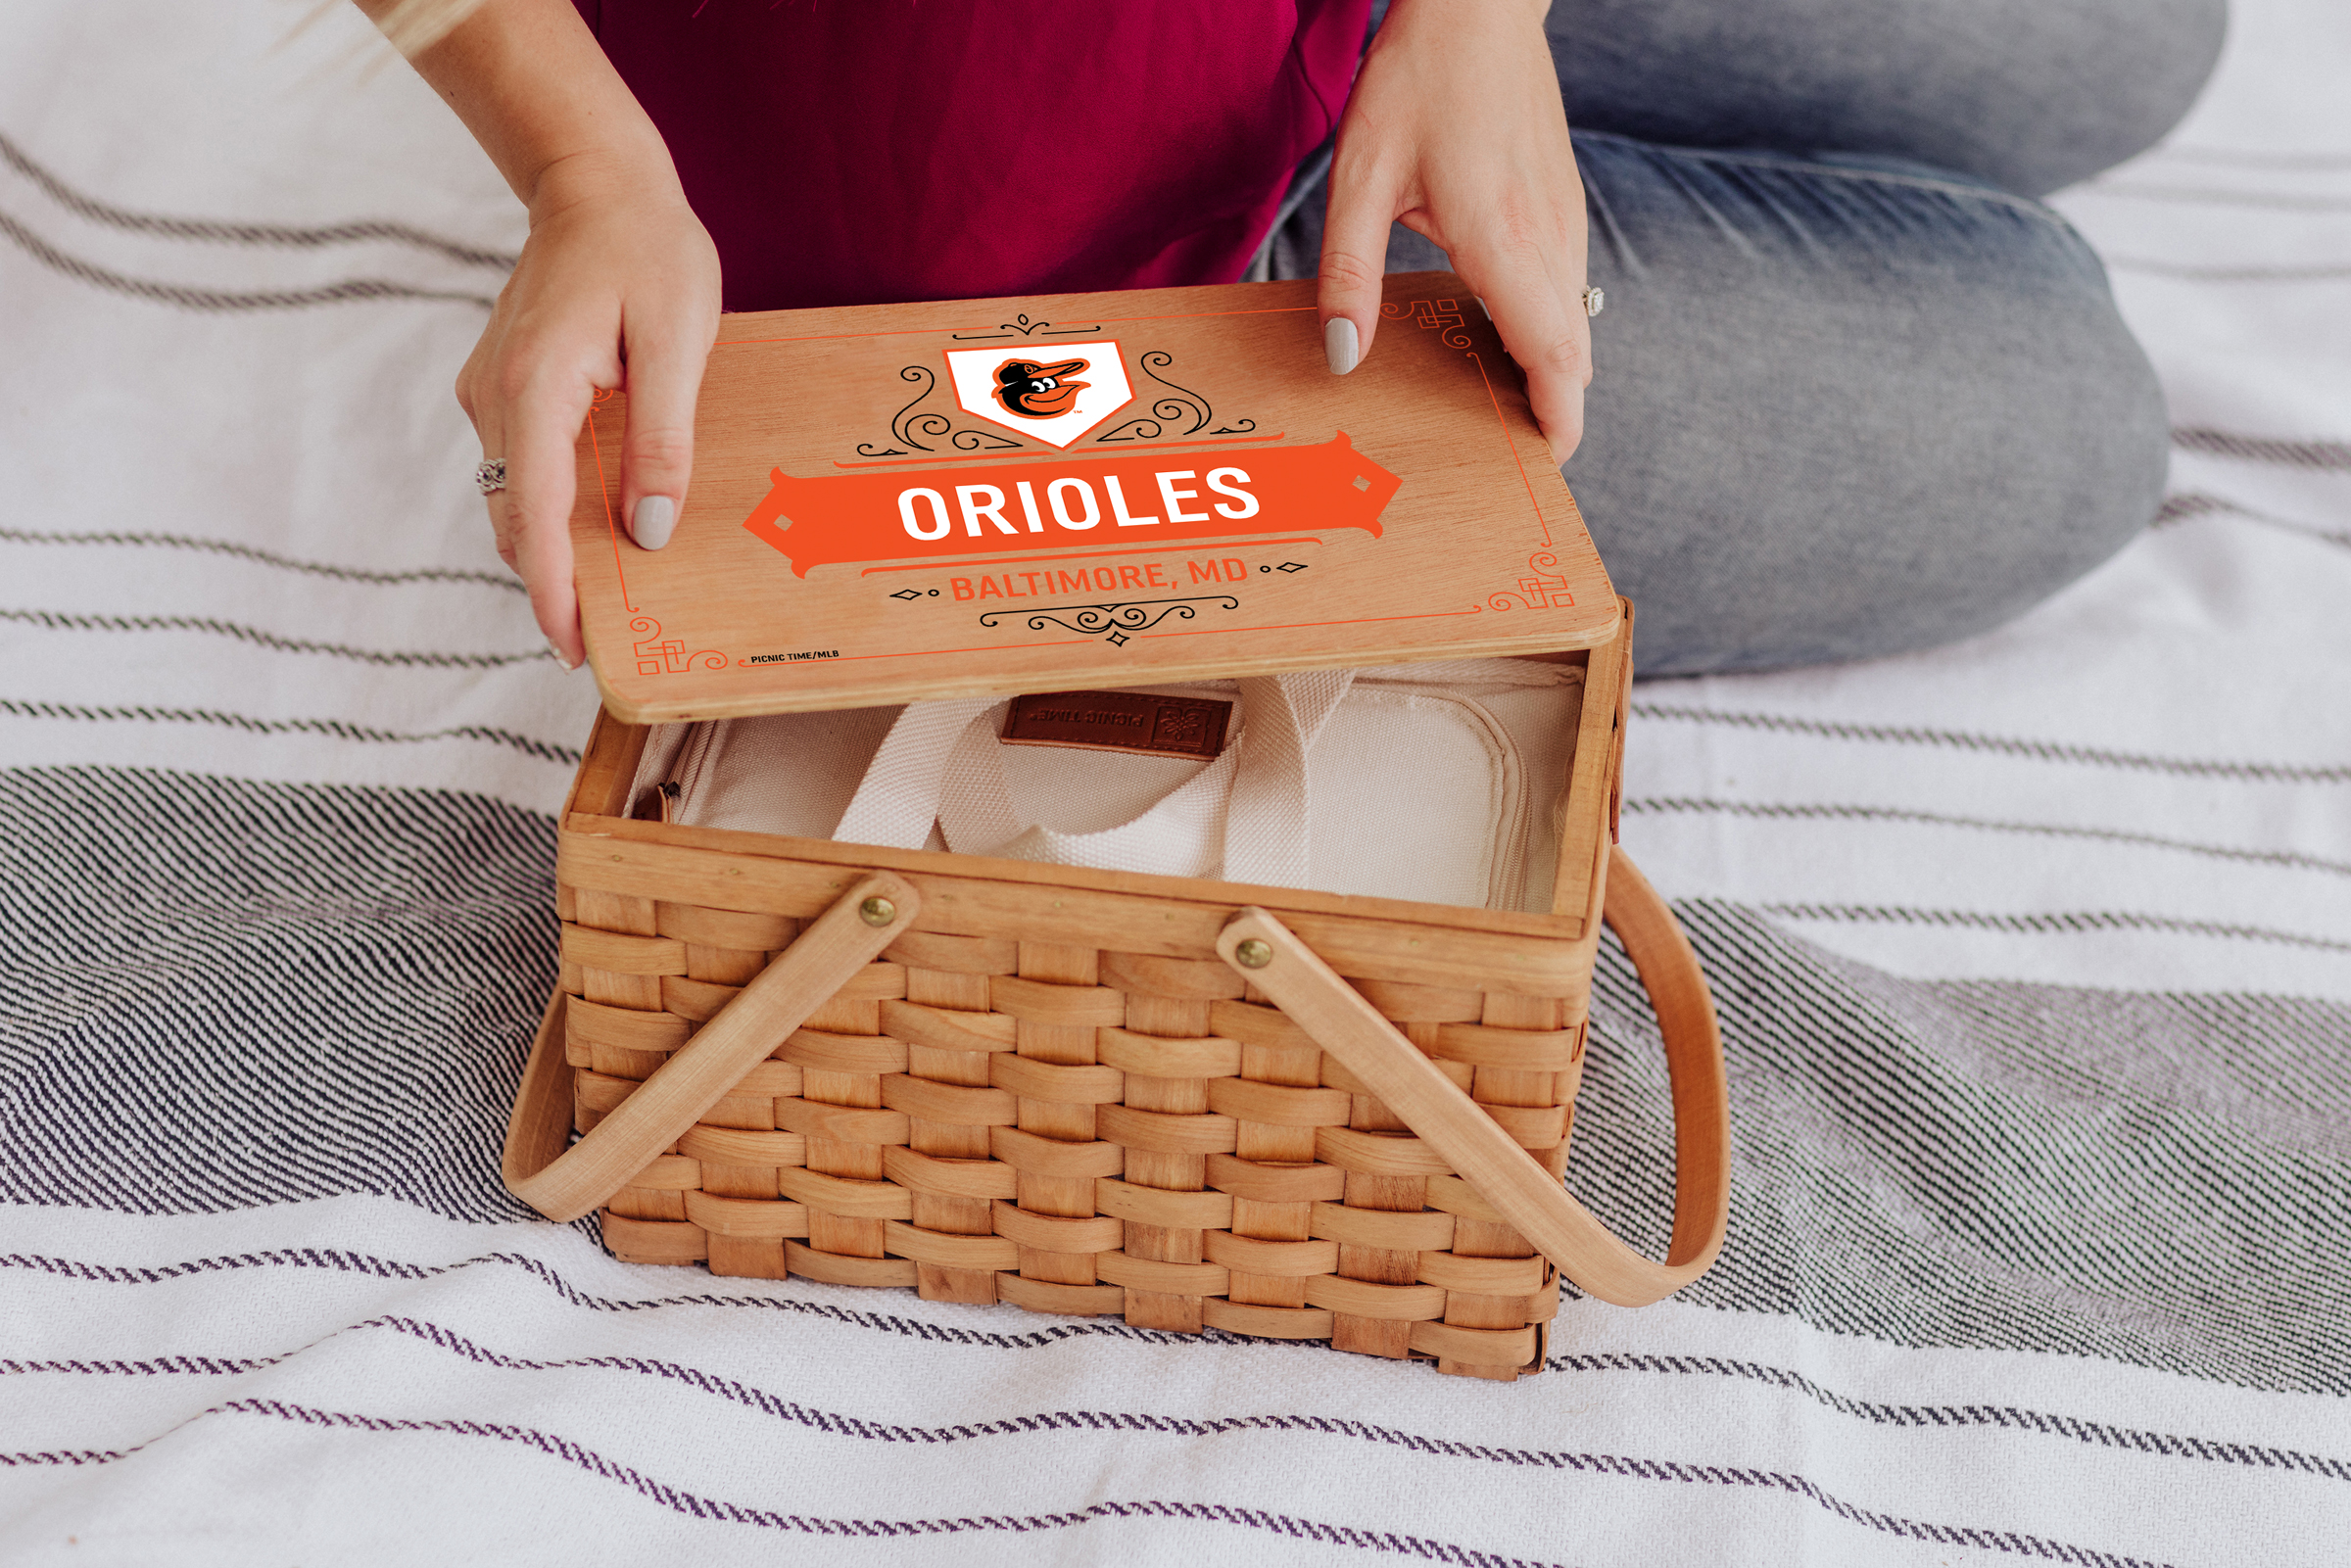 Baltimore Orioles - Poppy Personal Picnic Basket